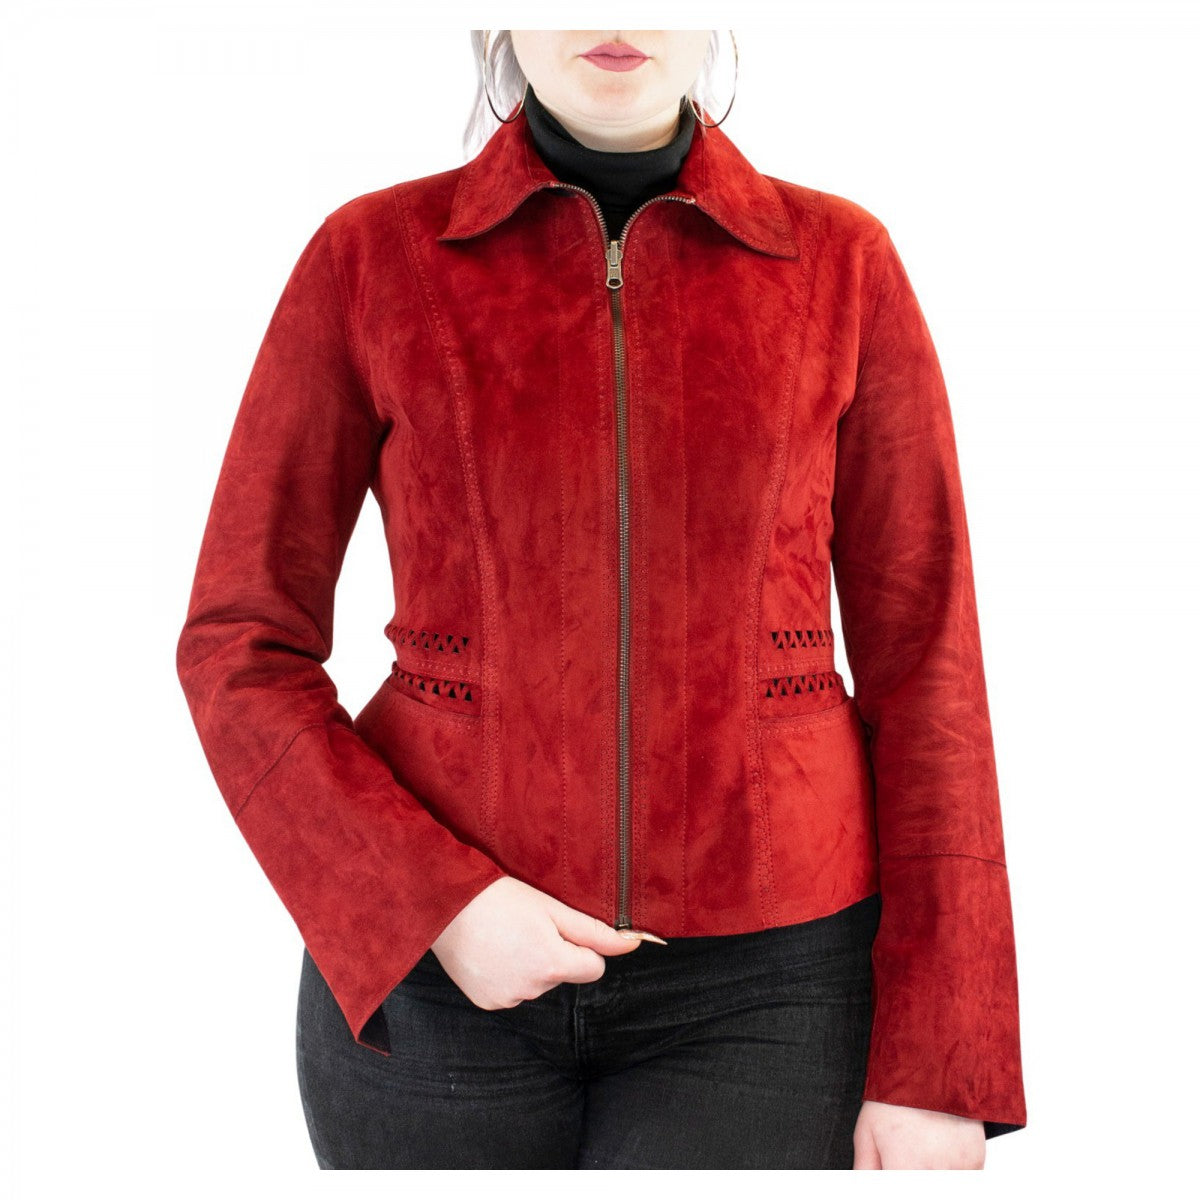 Italian handcrafted women's jackets in genuine leather